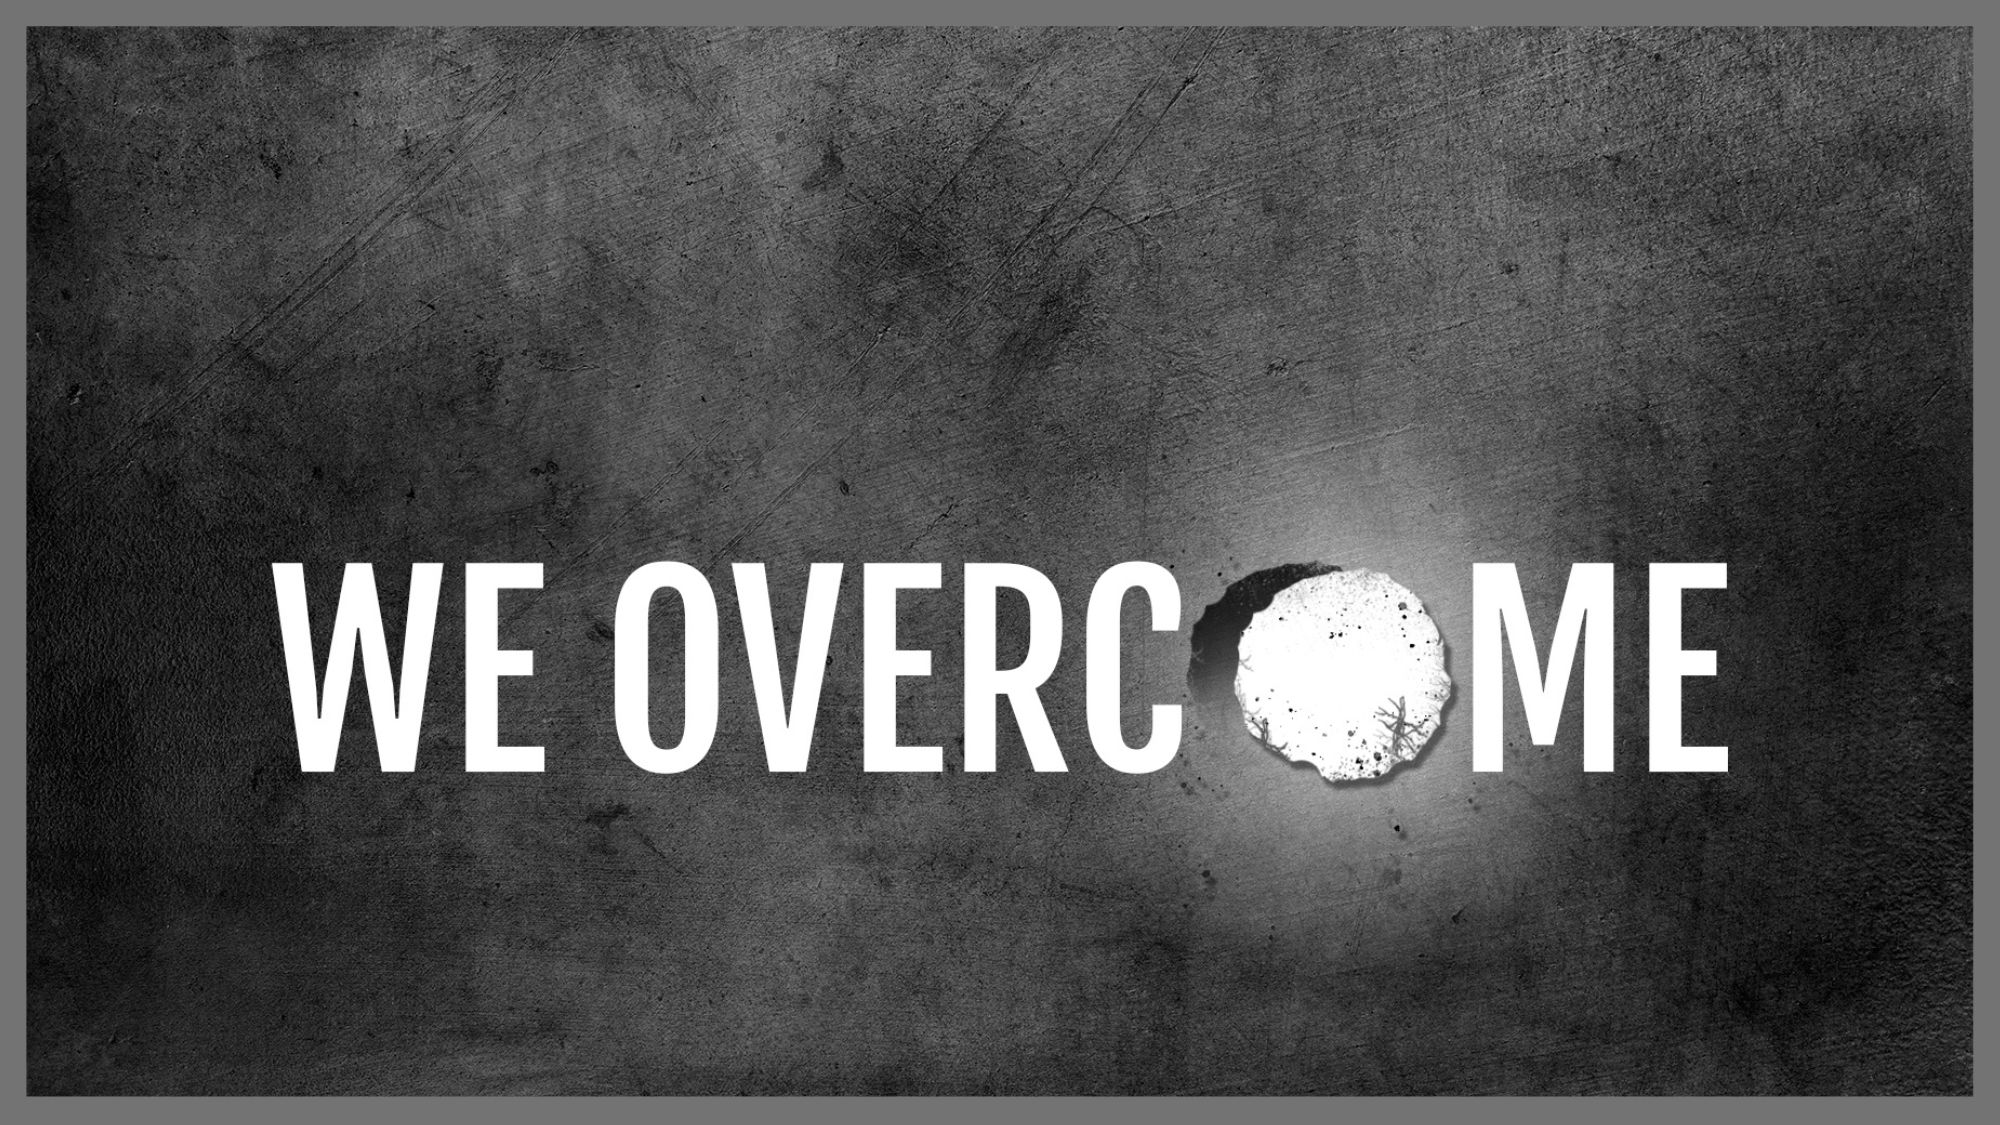 We Overcome